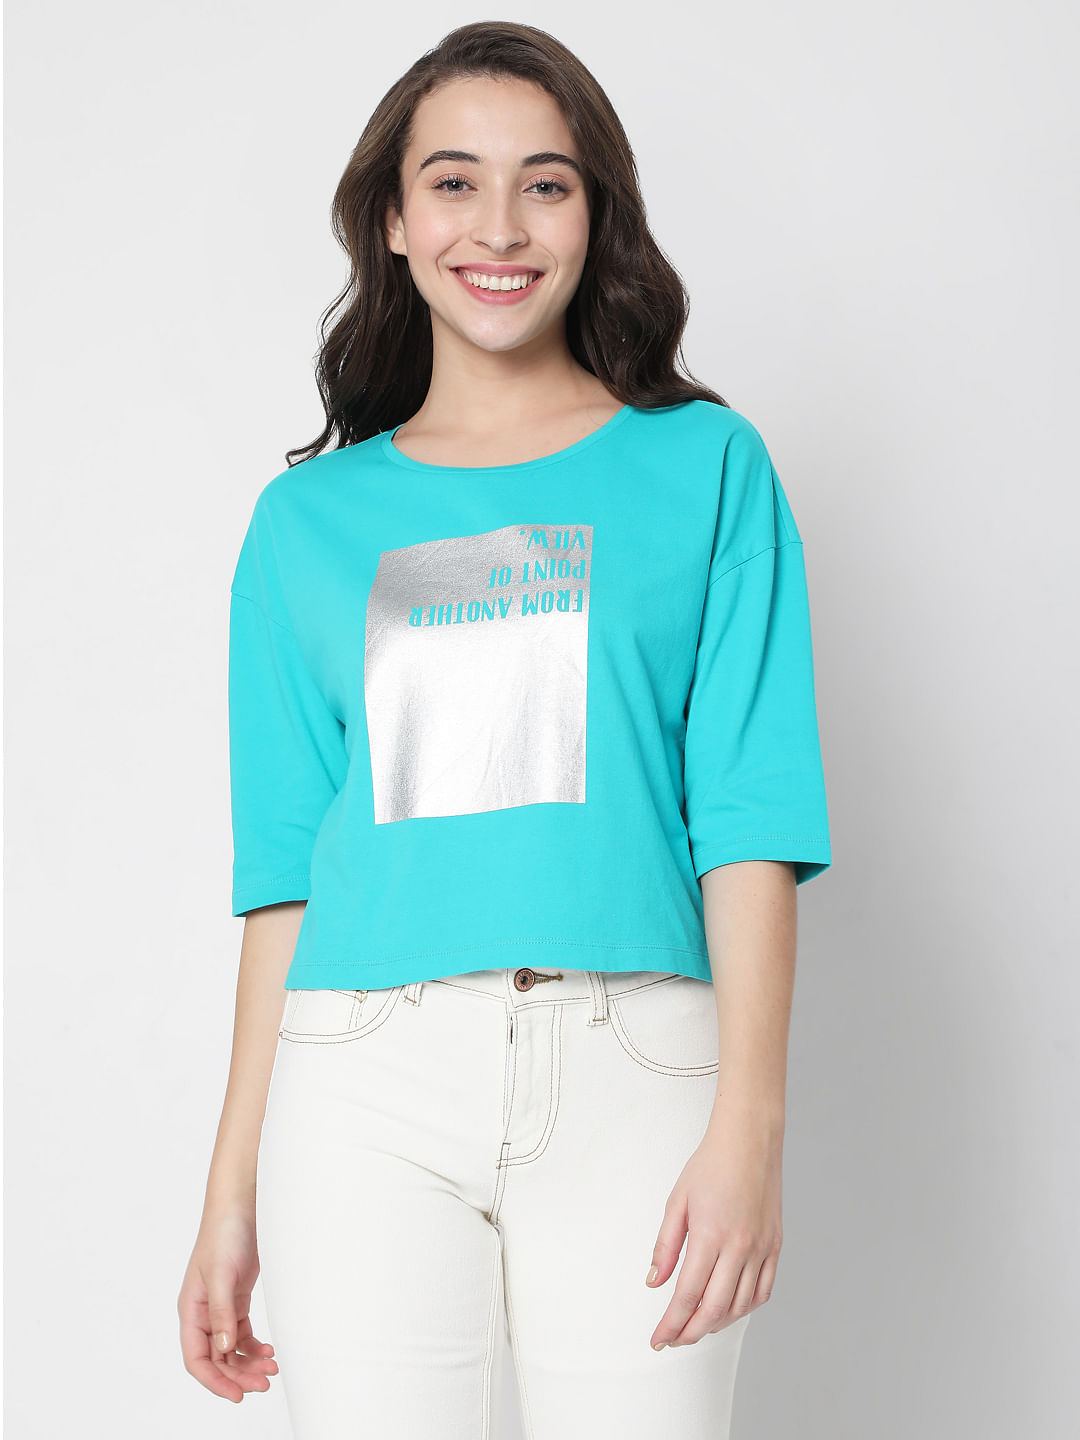 WOMEN FASHION Shirts & T-shirts Shirt Print H&M Shirt Purple M discount 81% 